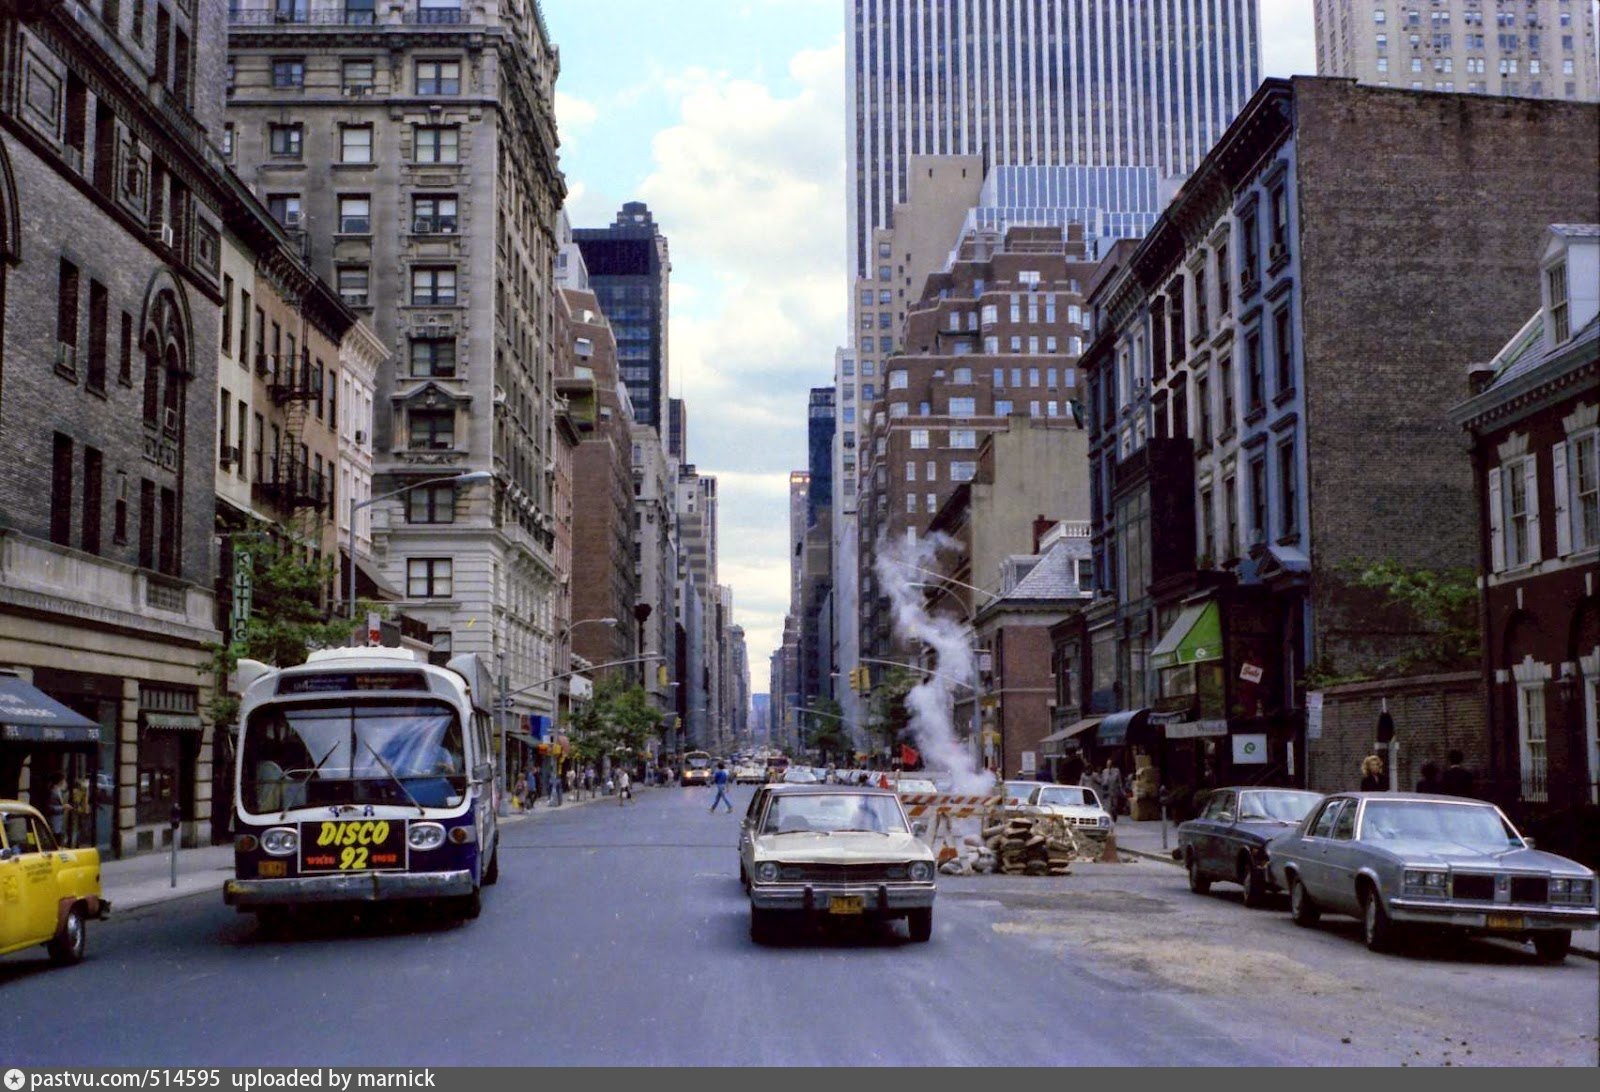 Streets avenue. Улицы Нью Йорка 1970е. 5 Авеню улица в Нью-Йорке.